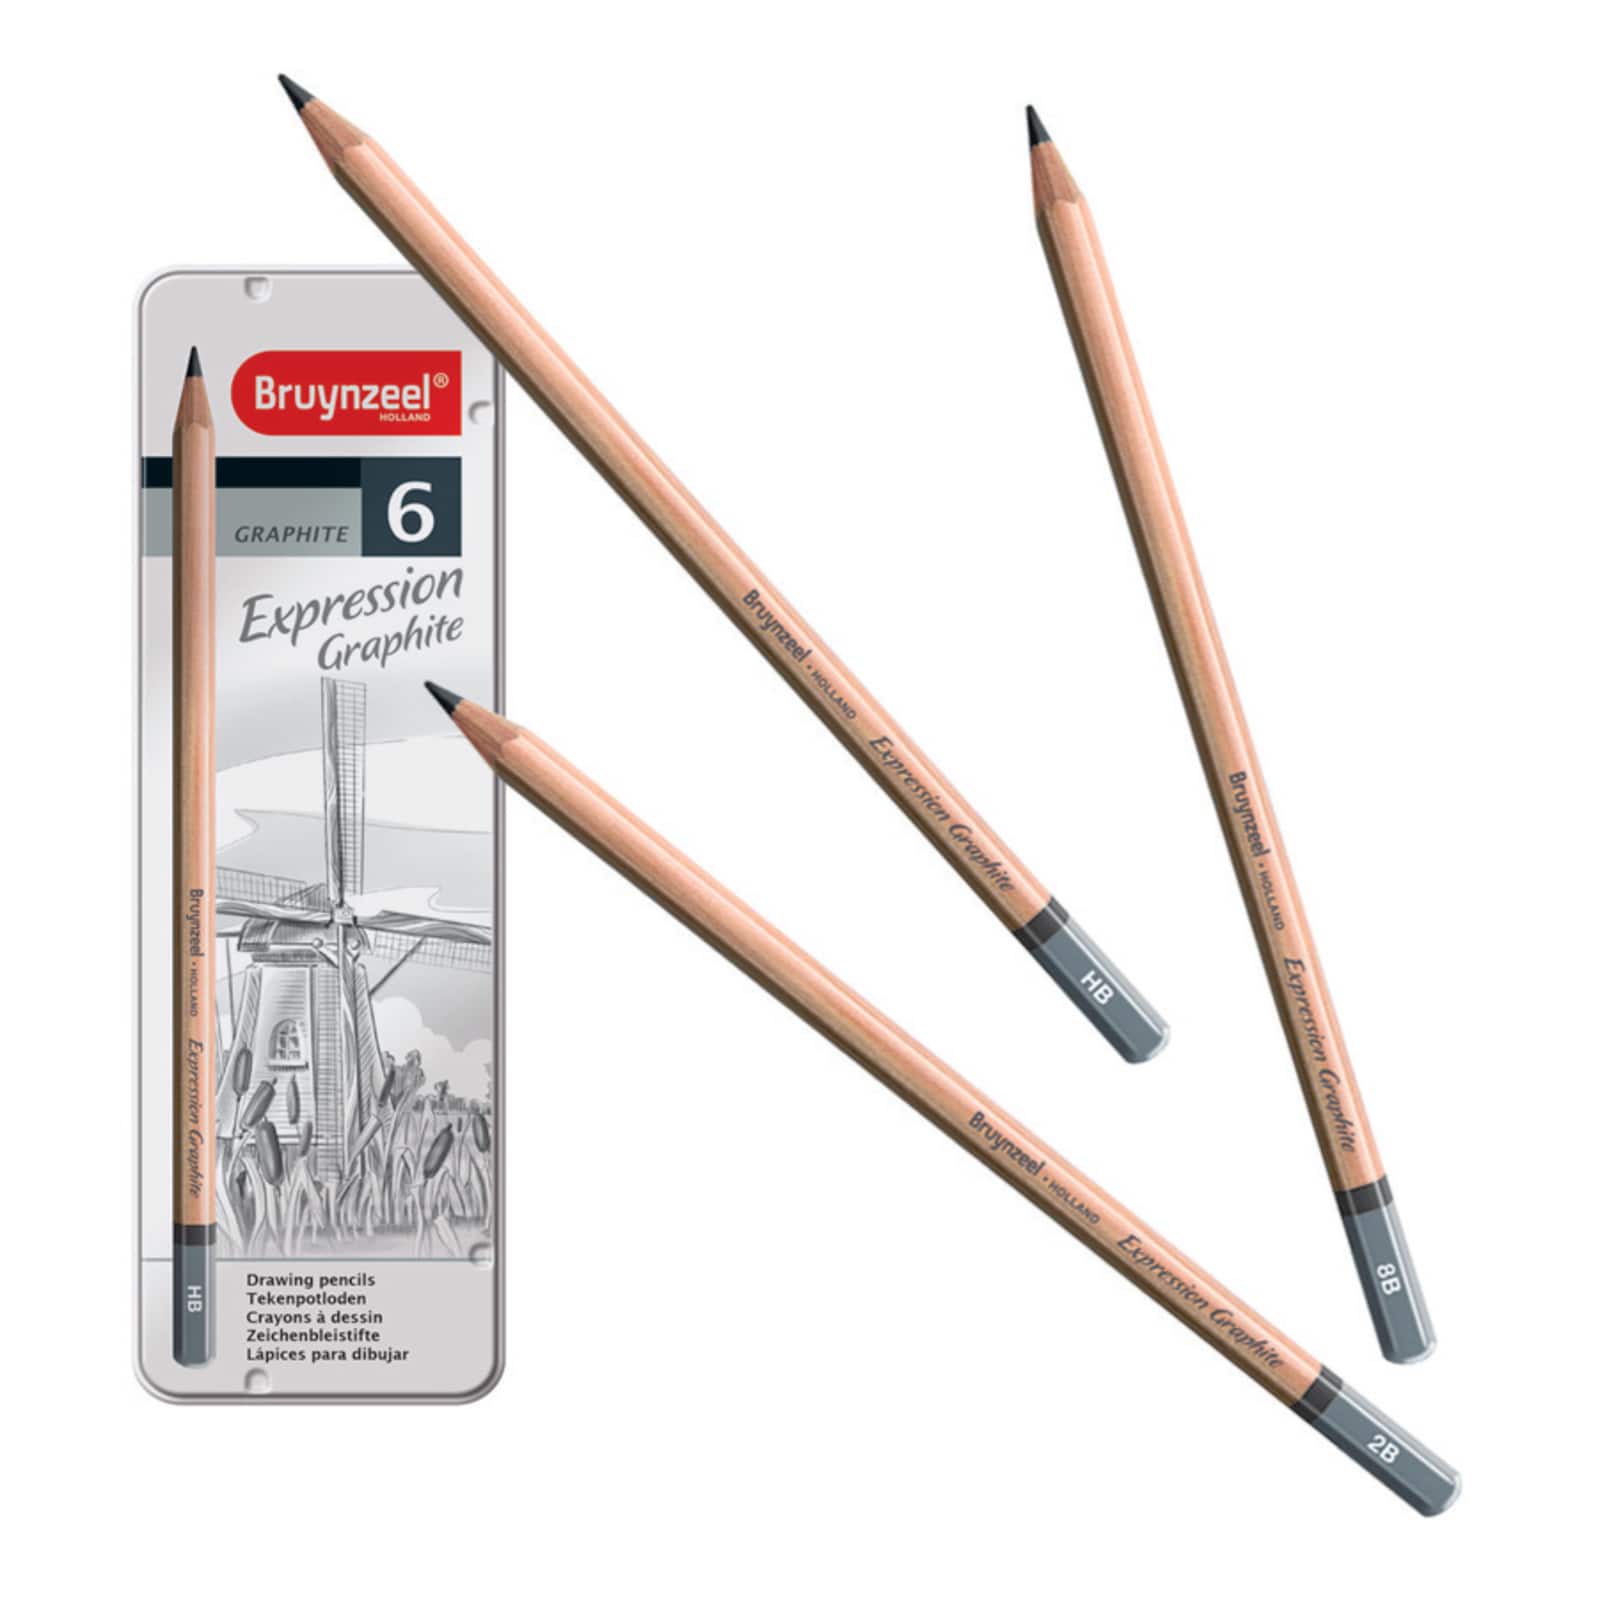 6 Packs: 6 ct. (36 total) Bruynzeel&#xAE; Expression Graphite Pencil Set